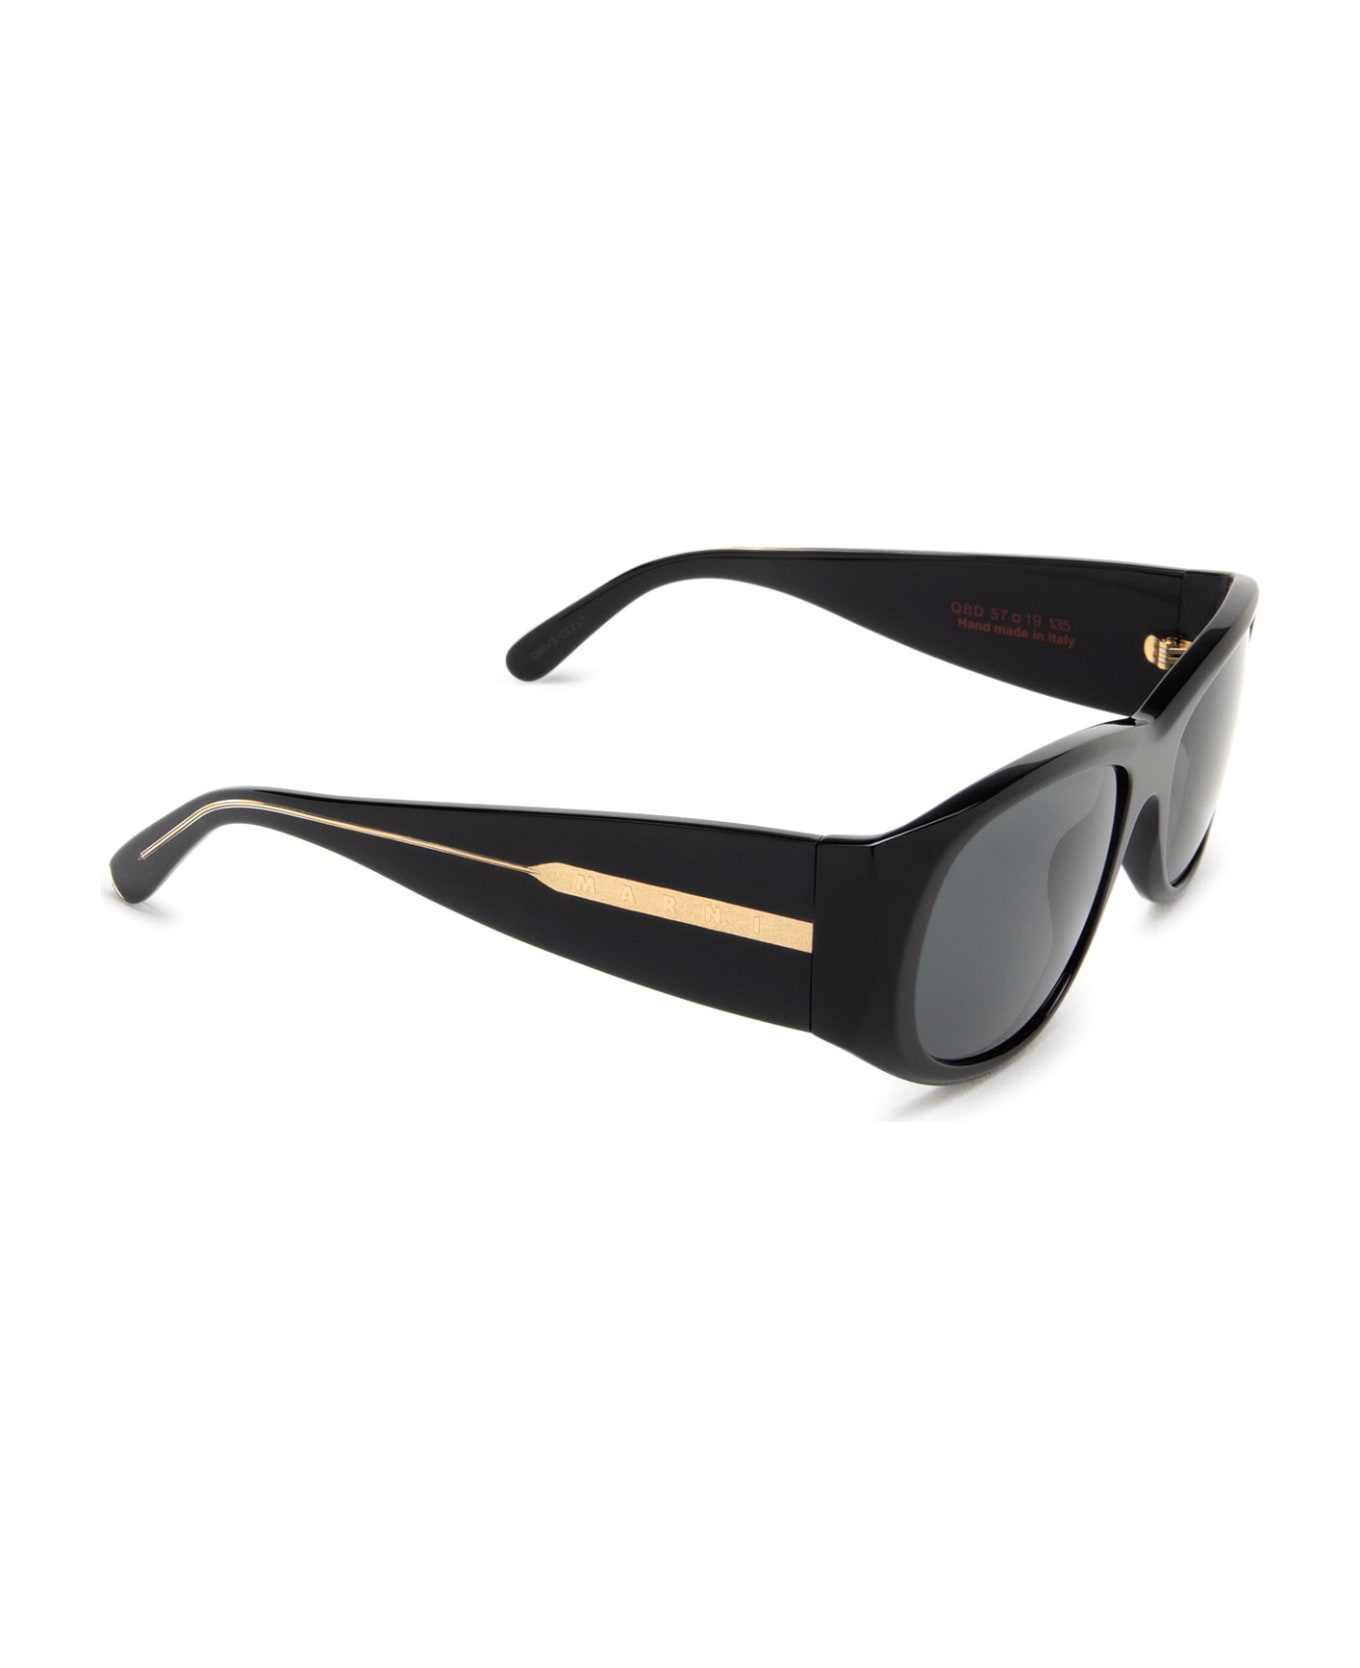 Marni Eyewear Orinoco River Black Sunglasses - Black サングラス